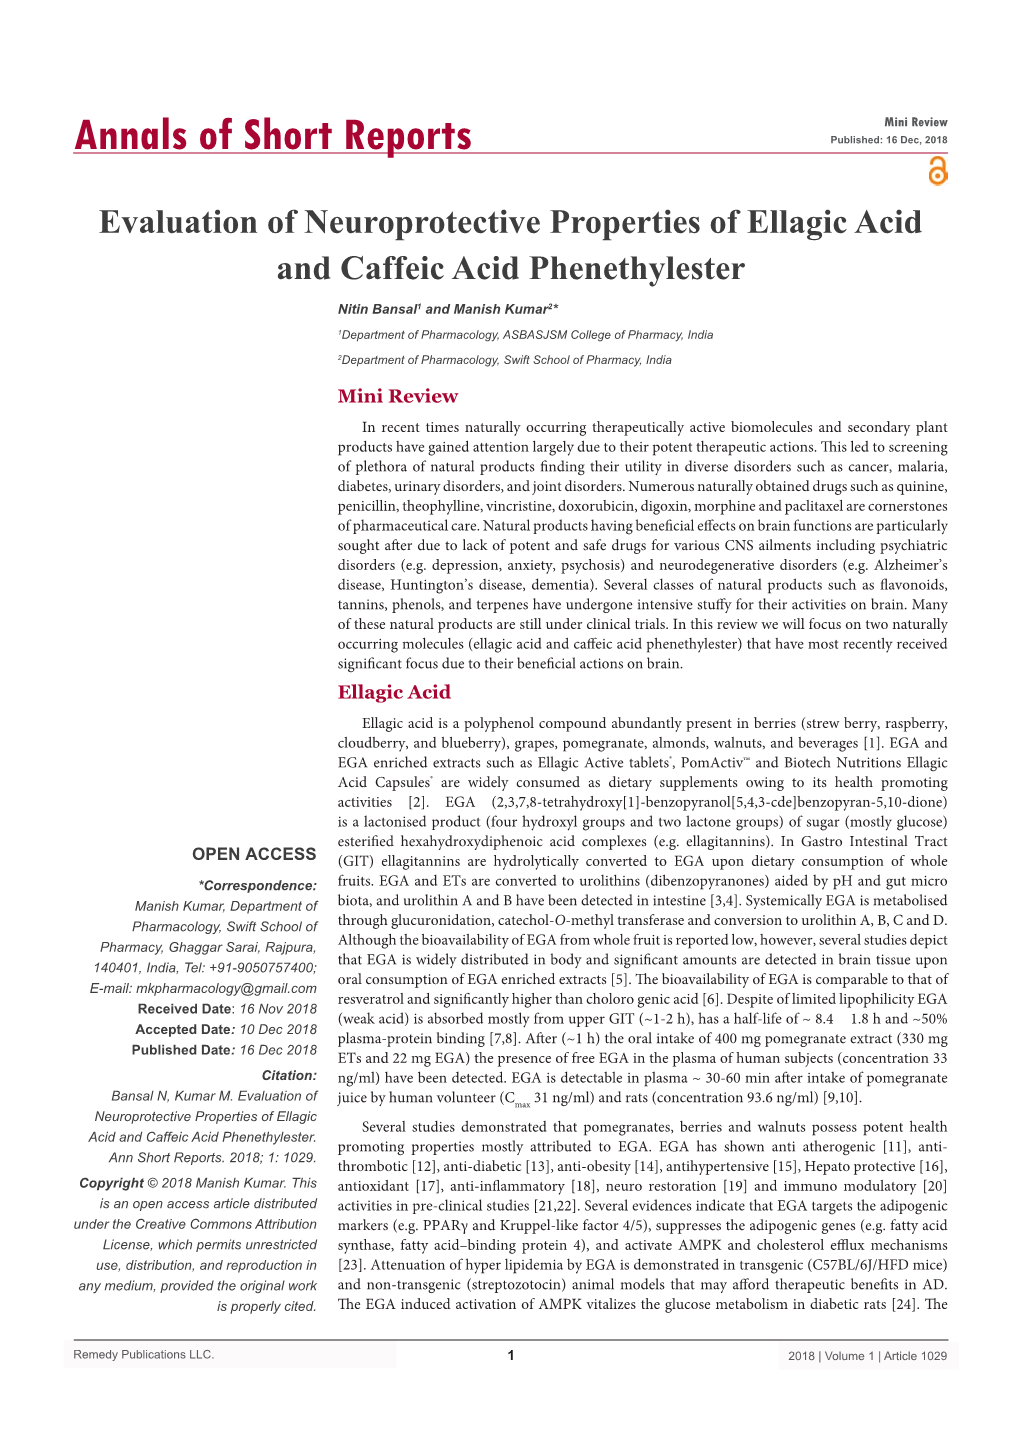 Evaluation of Neuroprotective Properties of Ellagic Acid and Caffeic Acid Phenethylester